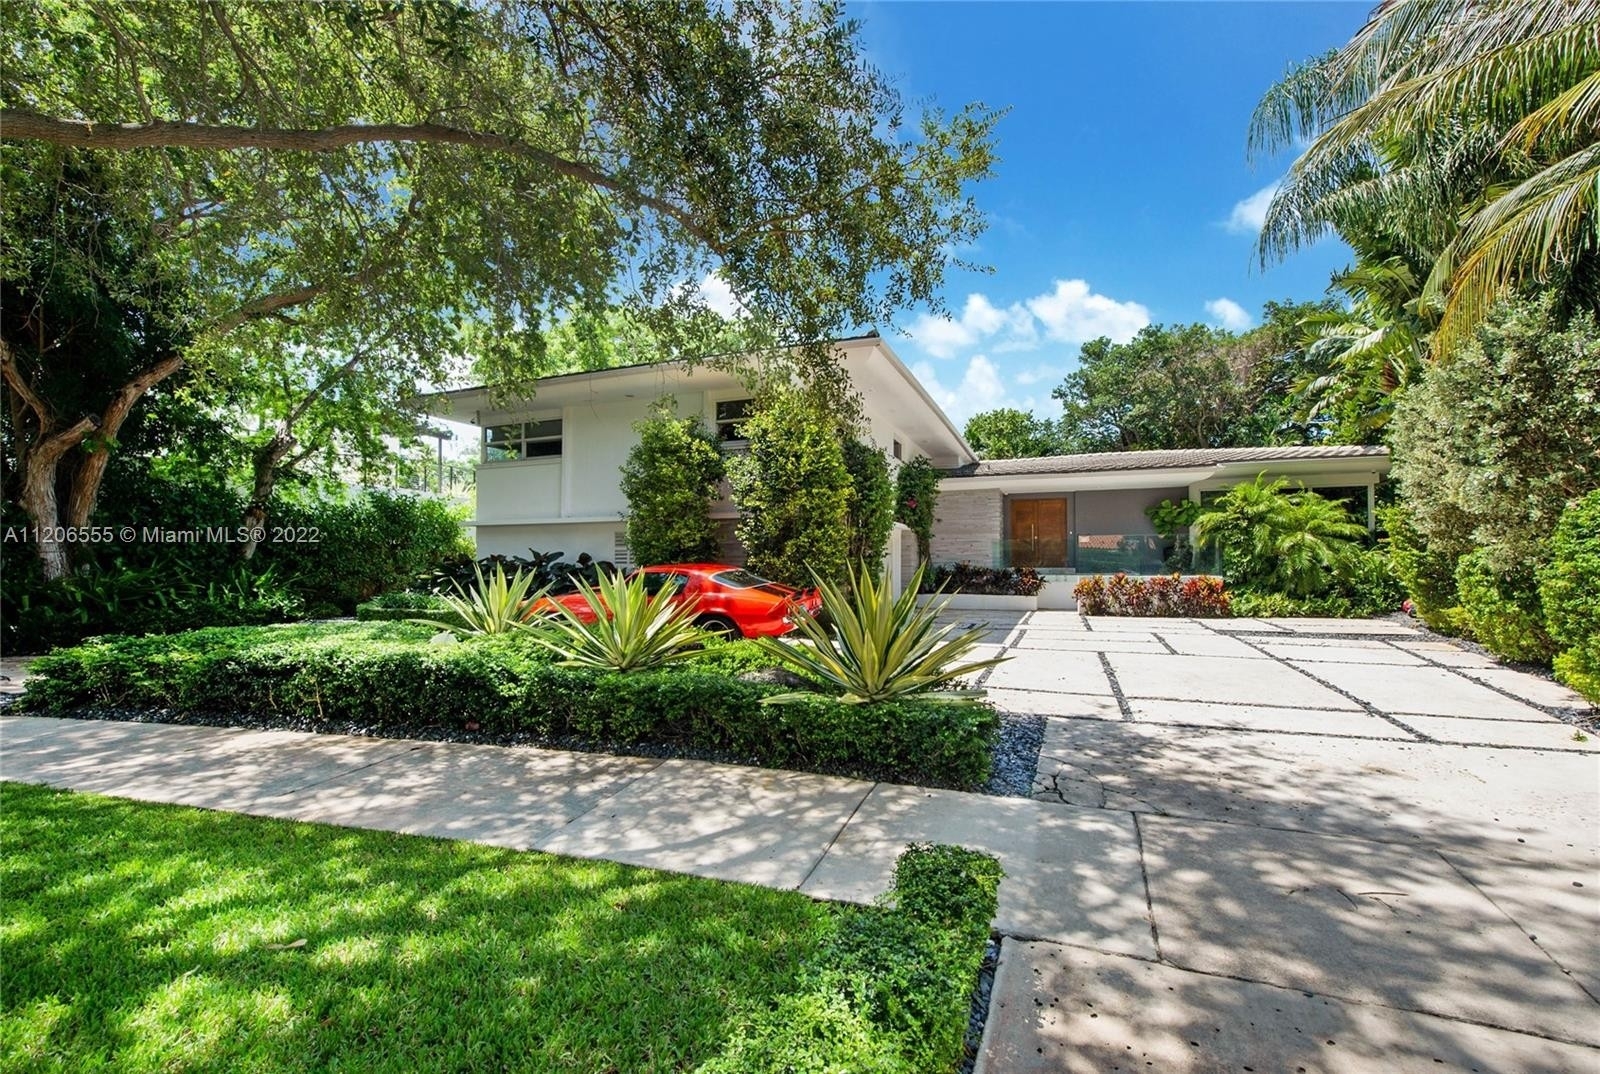 Single Family Home for Sale at Northeast Coconut Grove, Miami, FL 33133